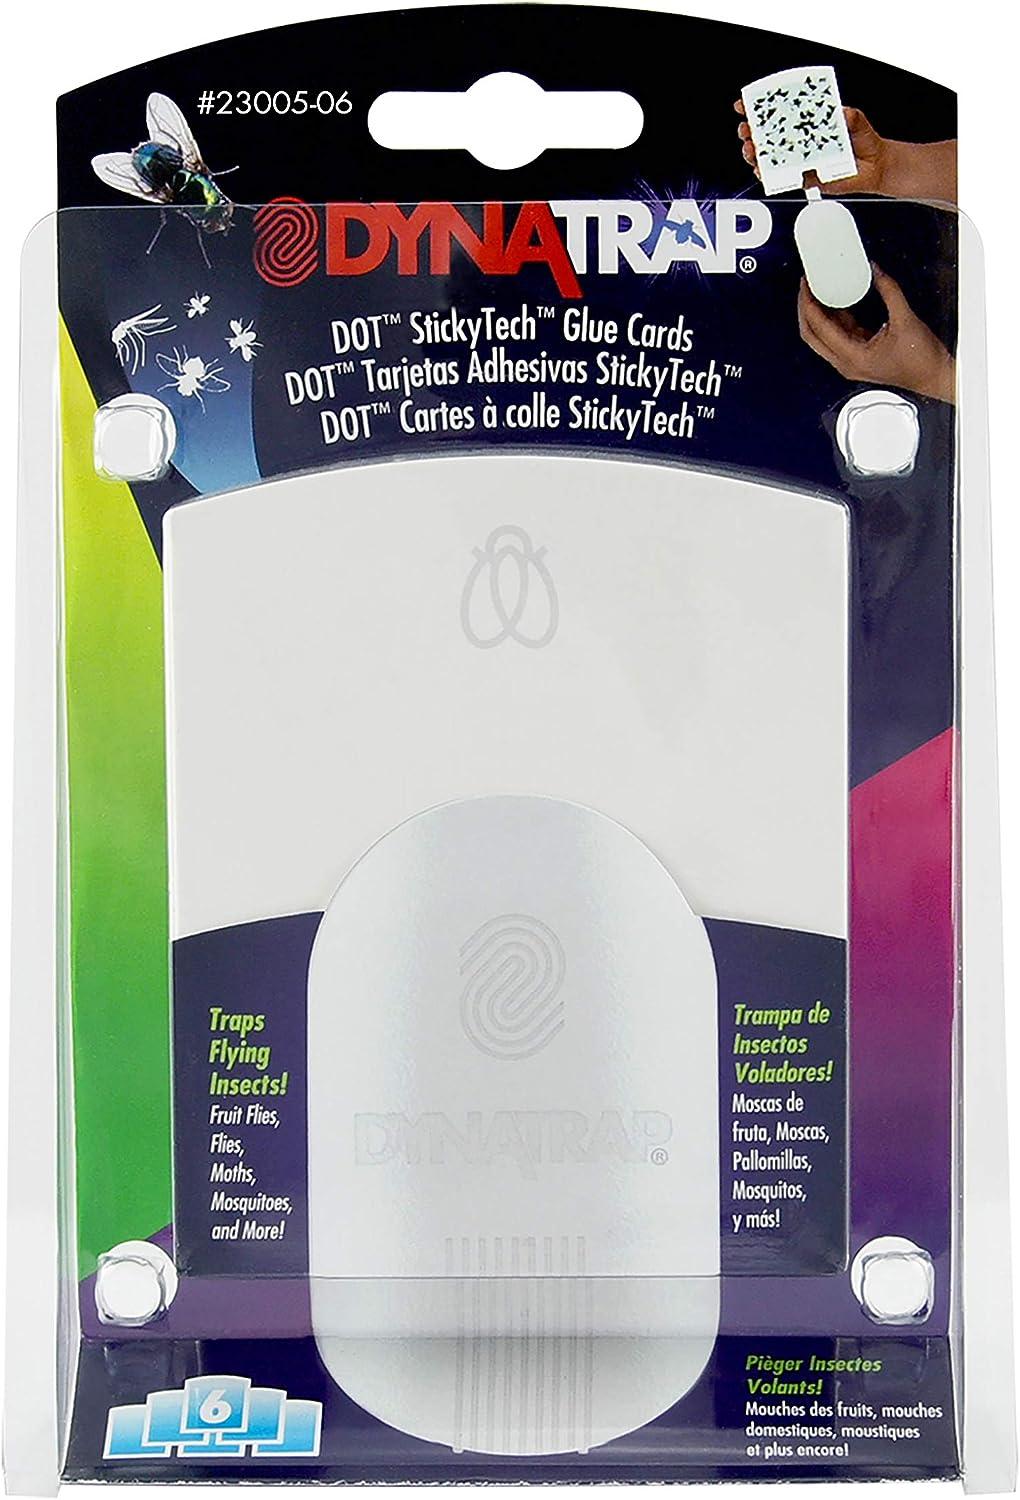 StickyTech Replacement Glue Cards For DynaTrap® Dot